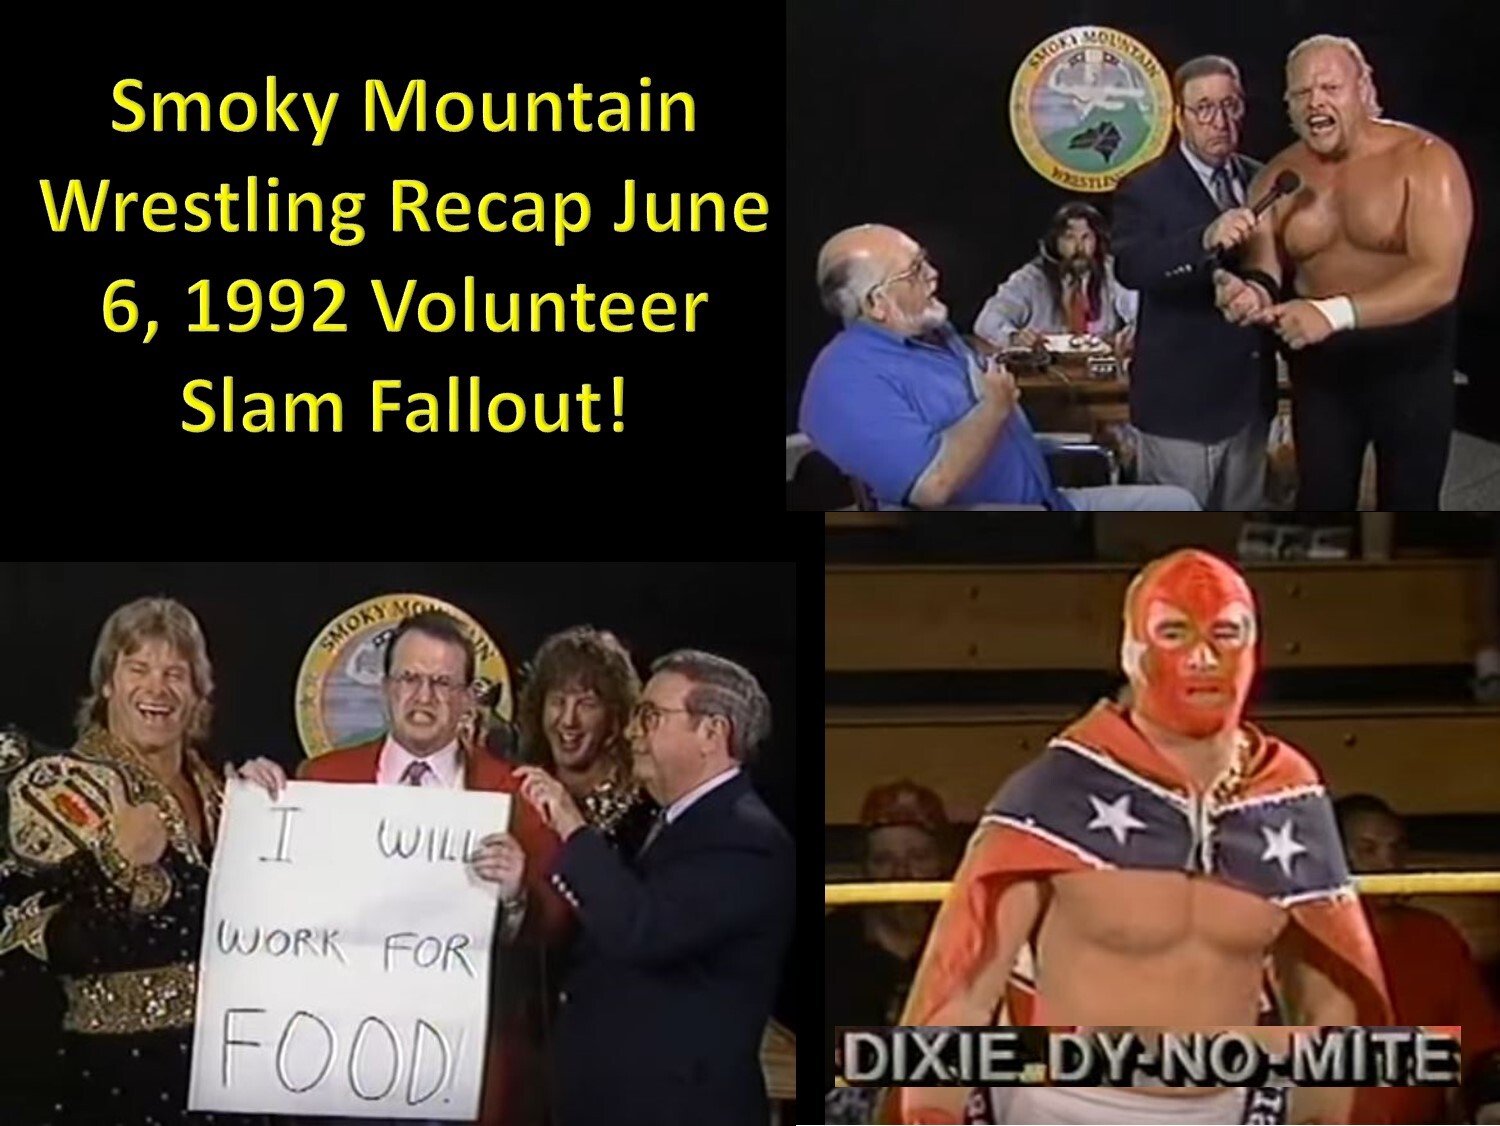 Episode 19 Smoky Mountain Wrestling Recap from June 6, 1992 Volunteer Slam Fallout!